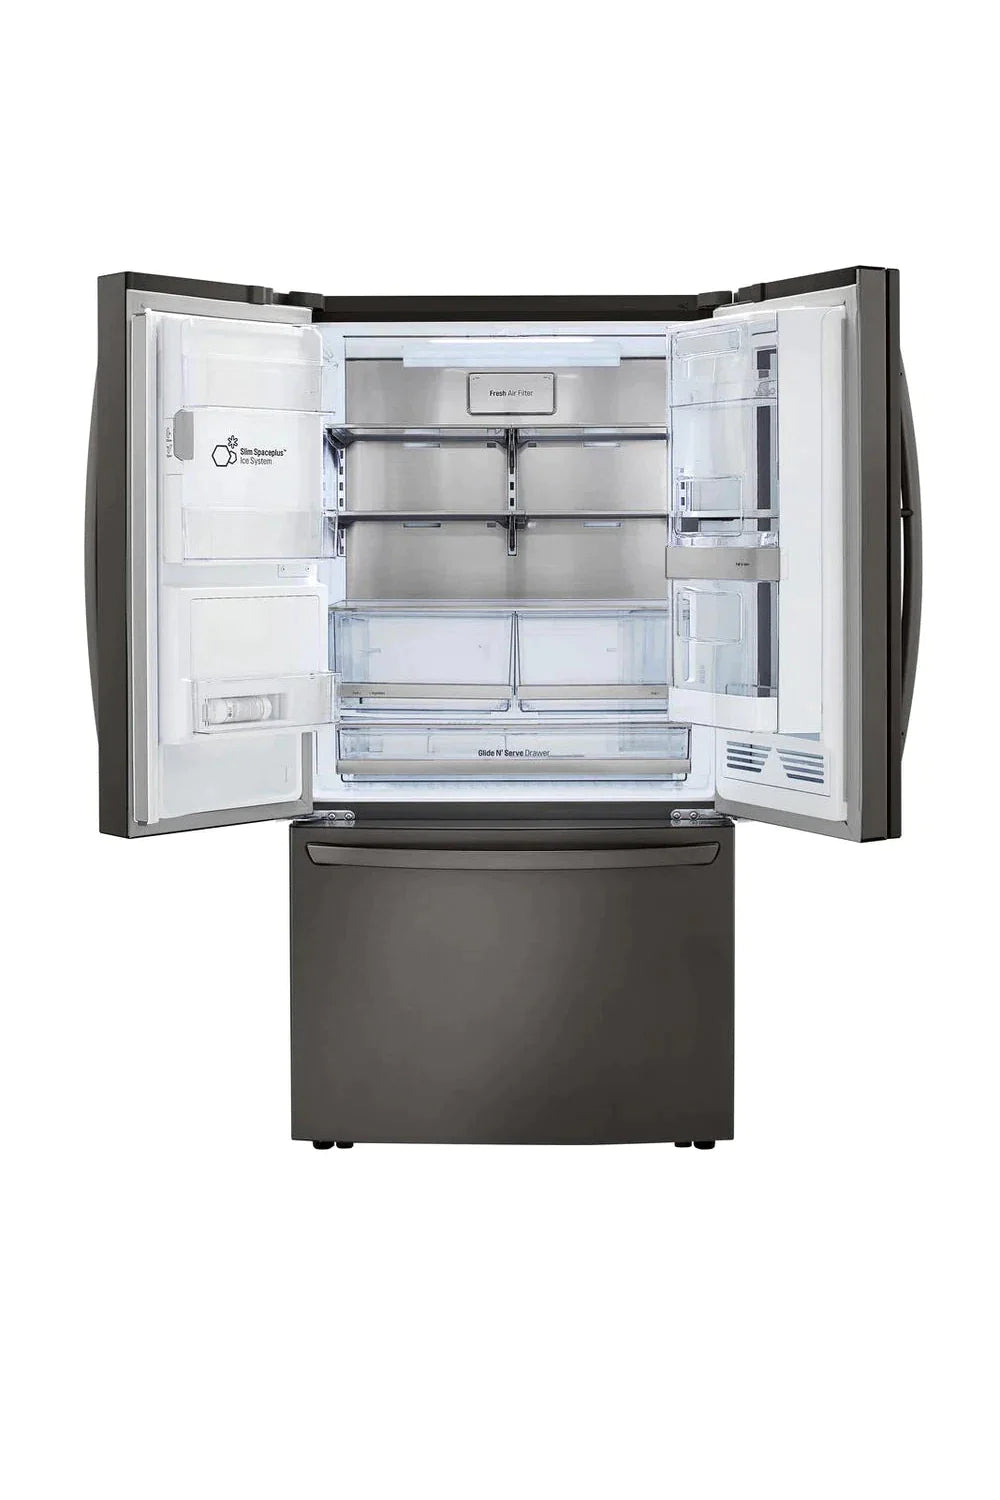 LG Refrigerator 36" Black Stainless Steel LRFVC2406D - Appliance Bazaar